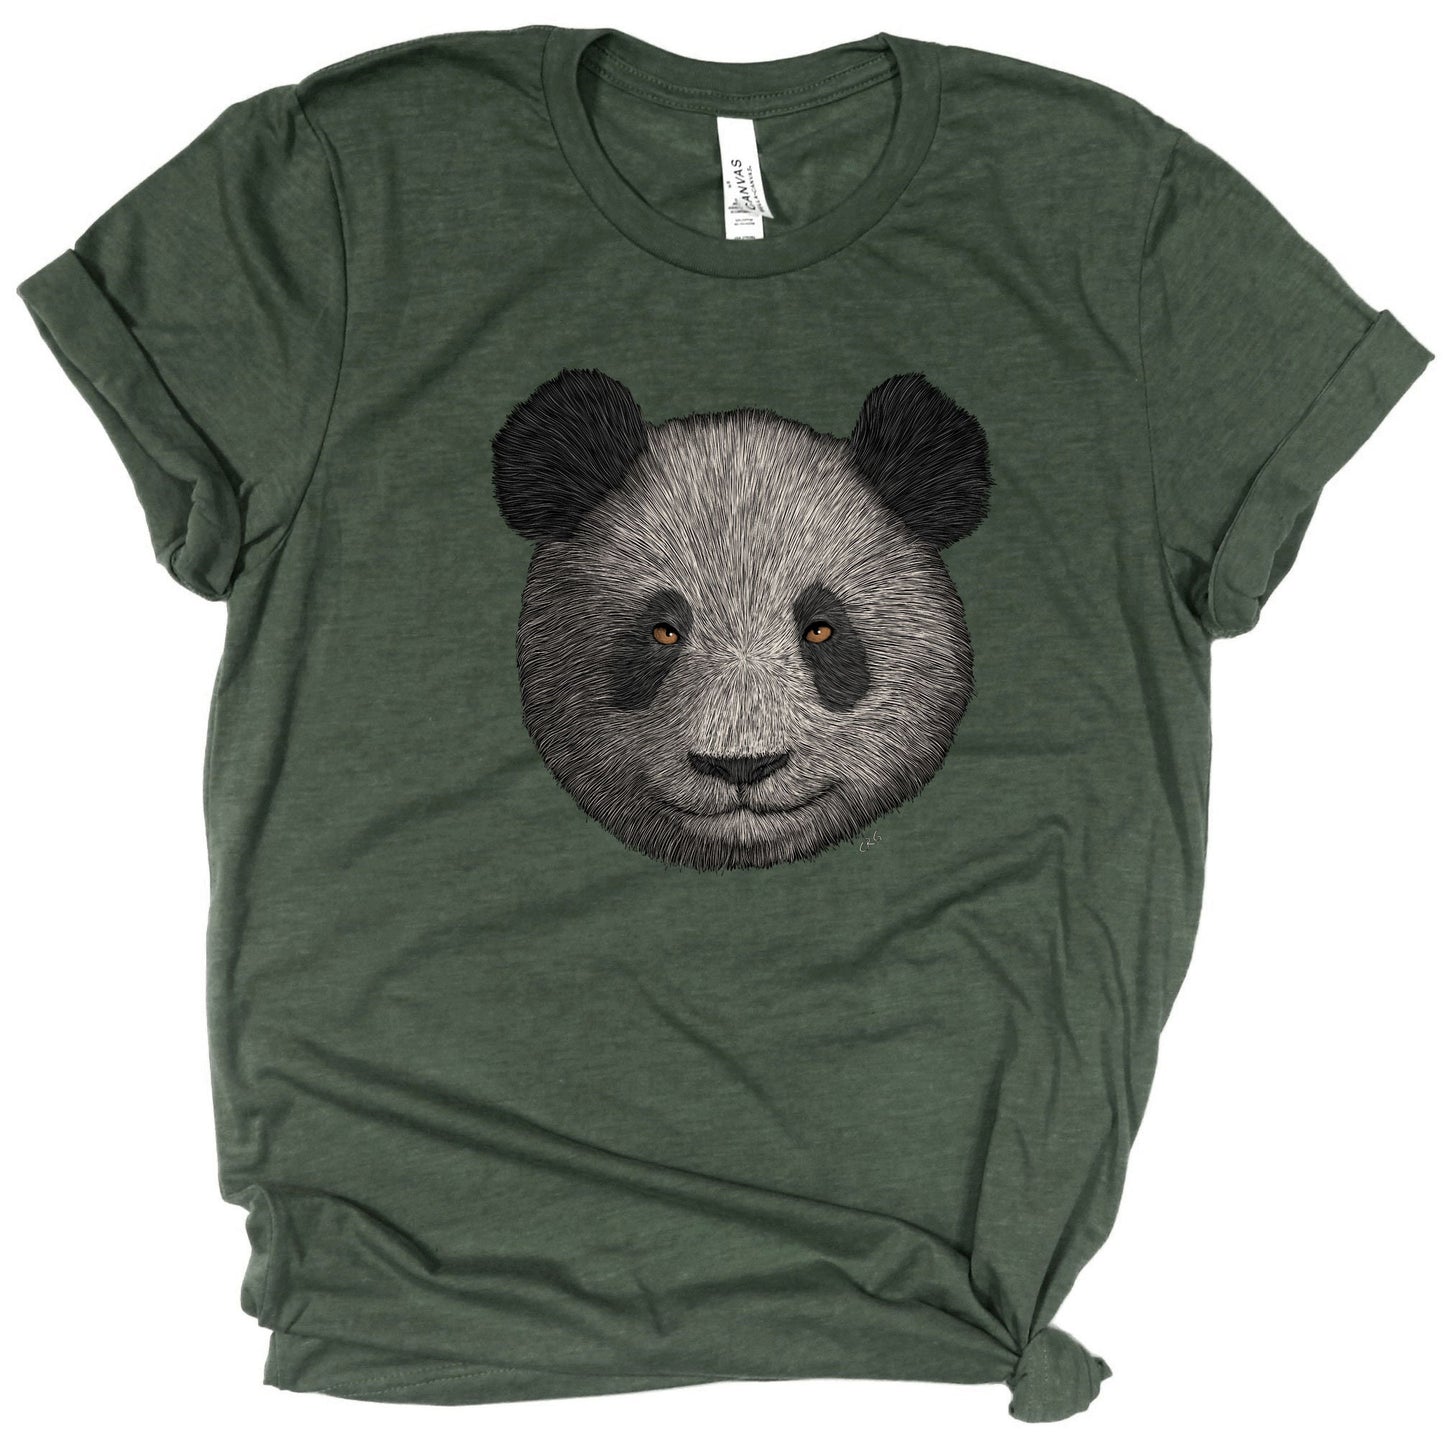 Panda Shirt